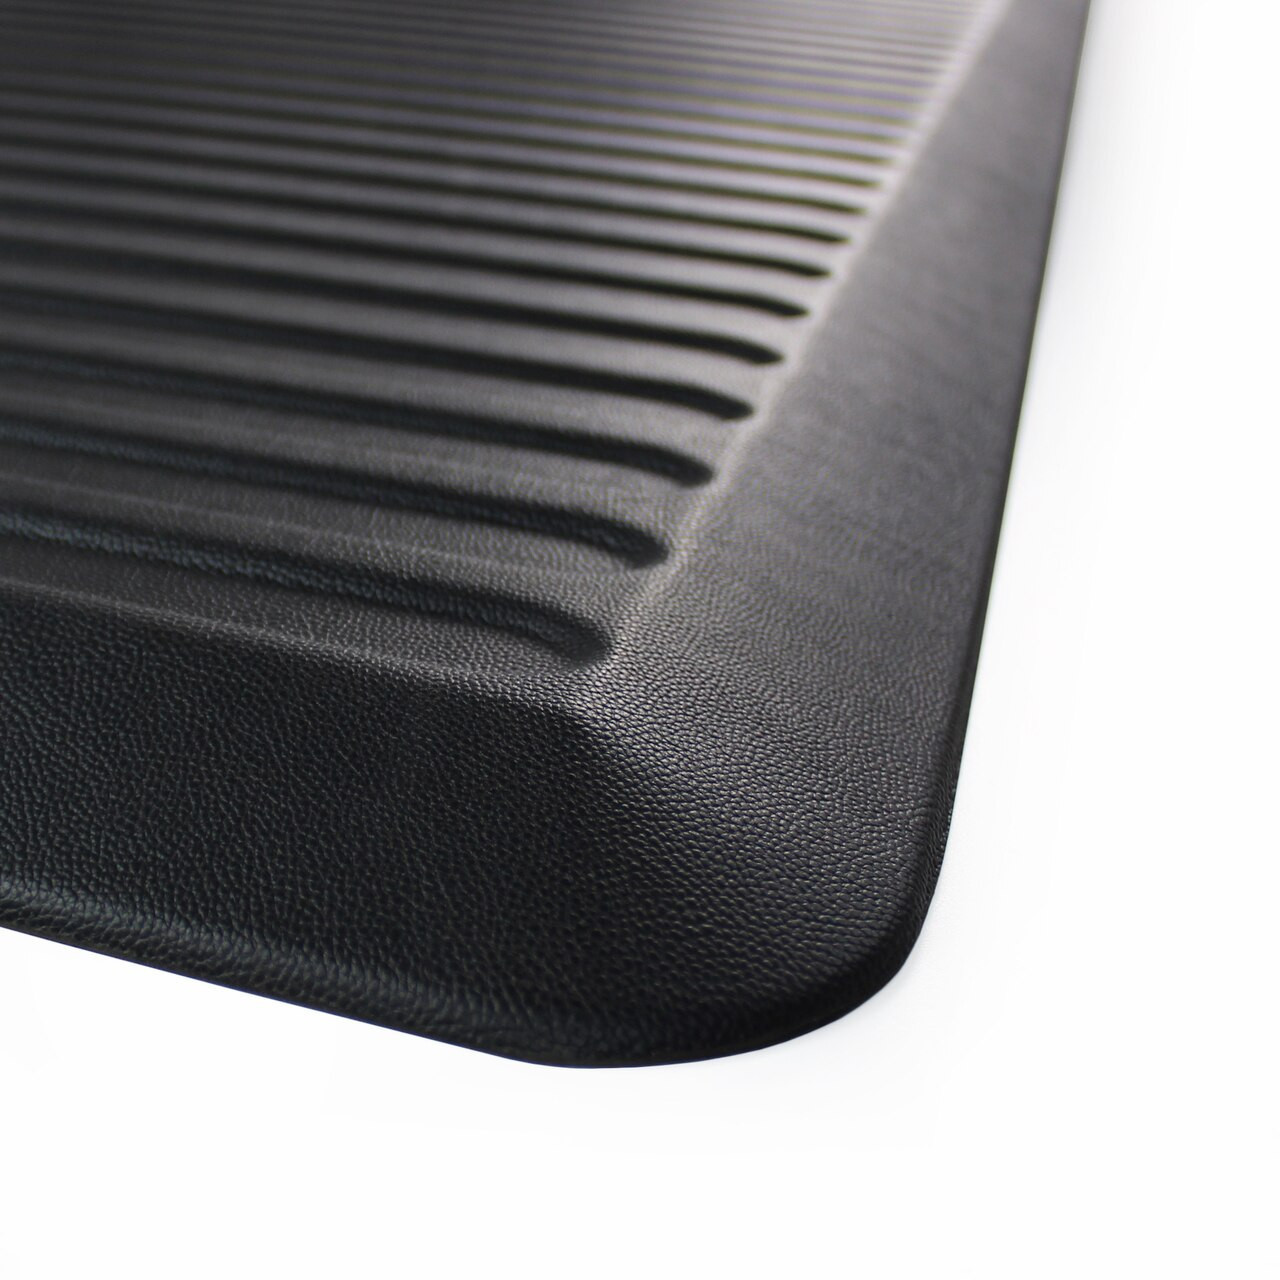 3M™ Safety-Walk™ Cushion Mat 3270 - Black, Anti-Fatigue Matting